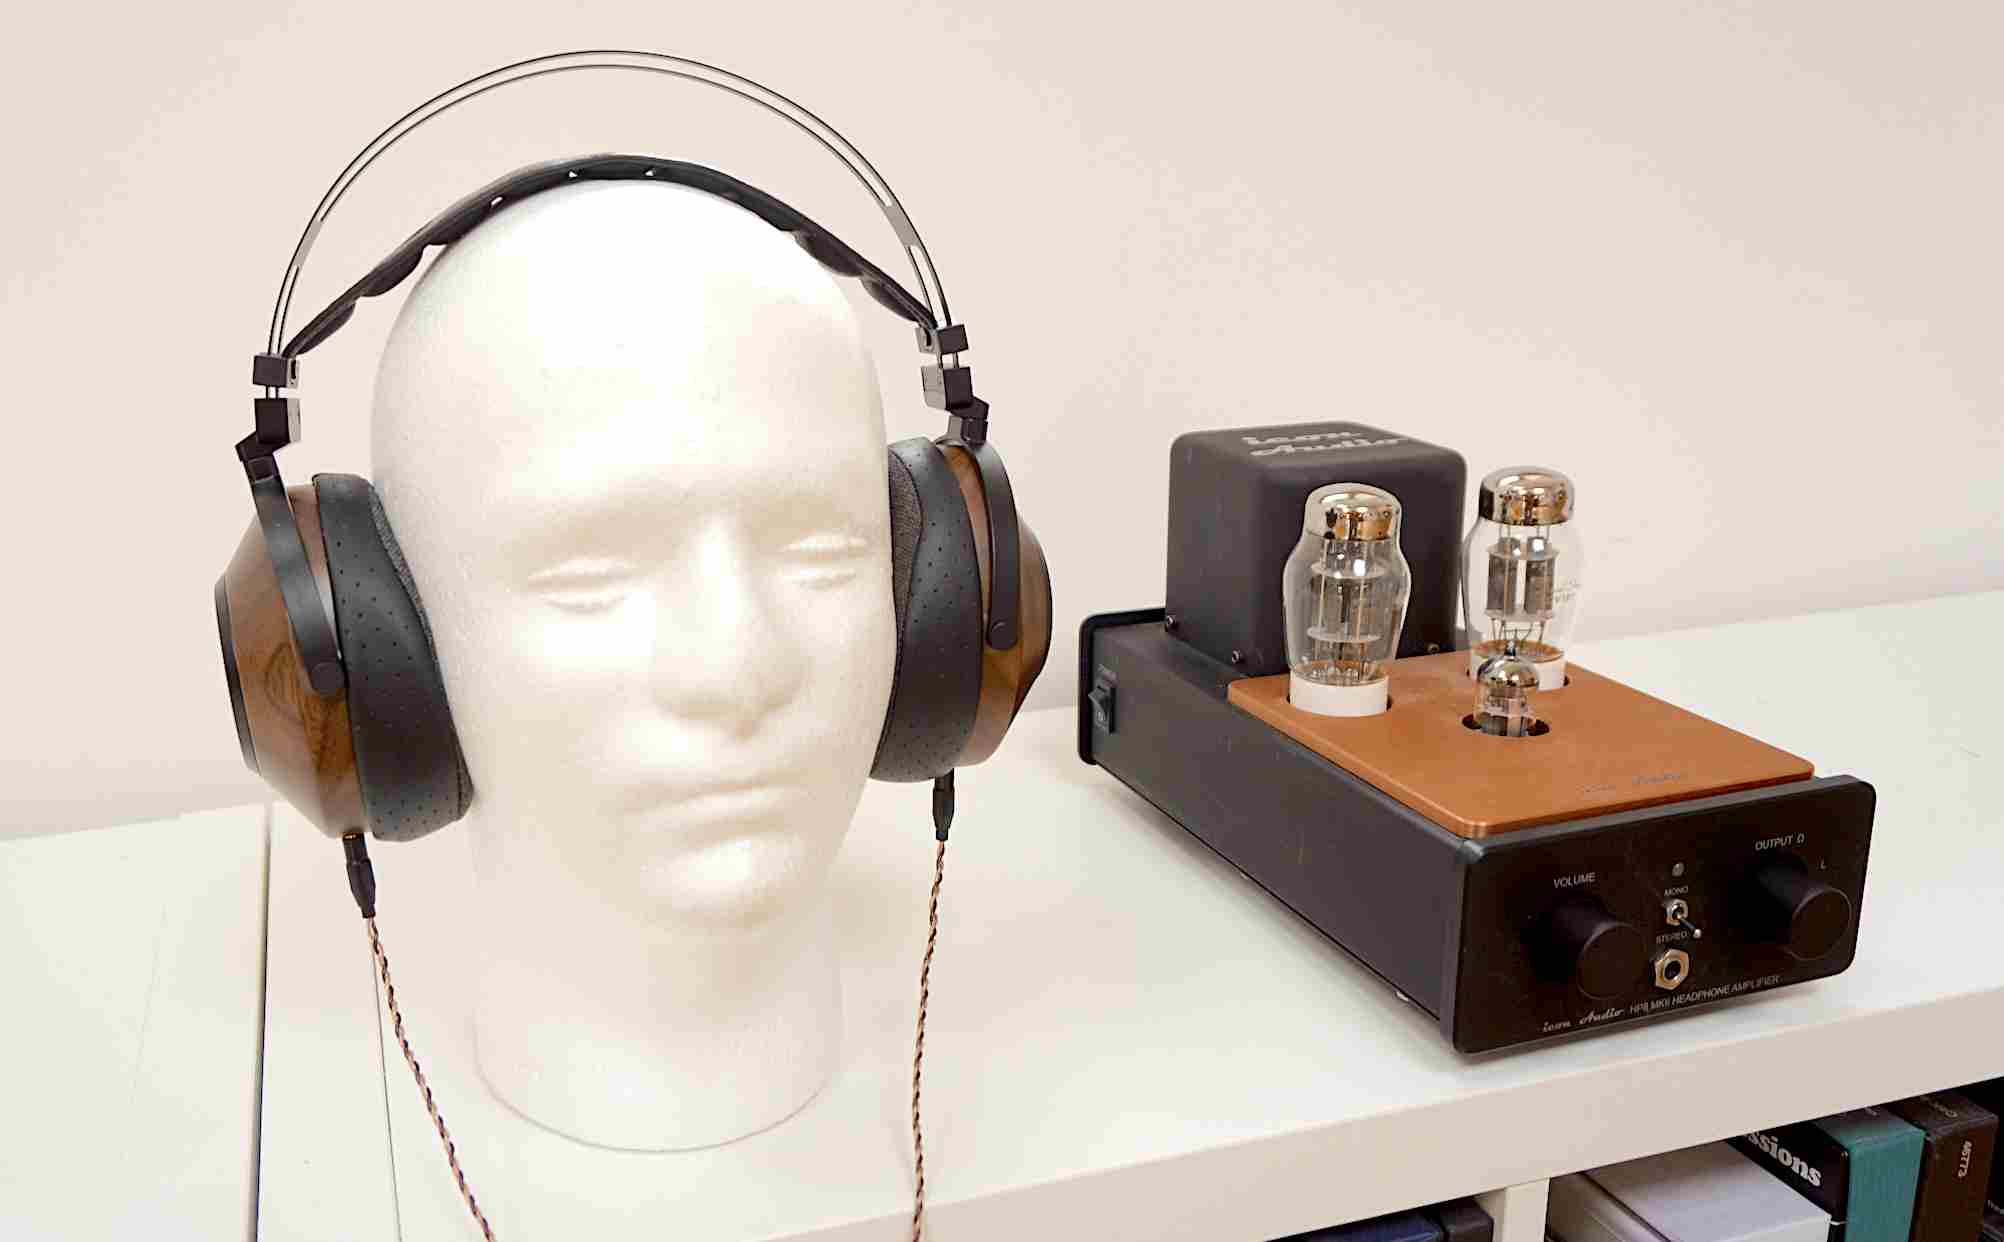 SV023 Headphones from SIVGA